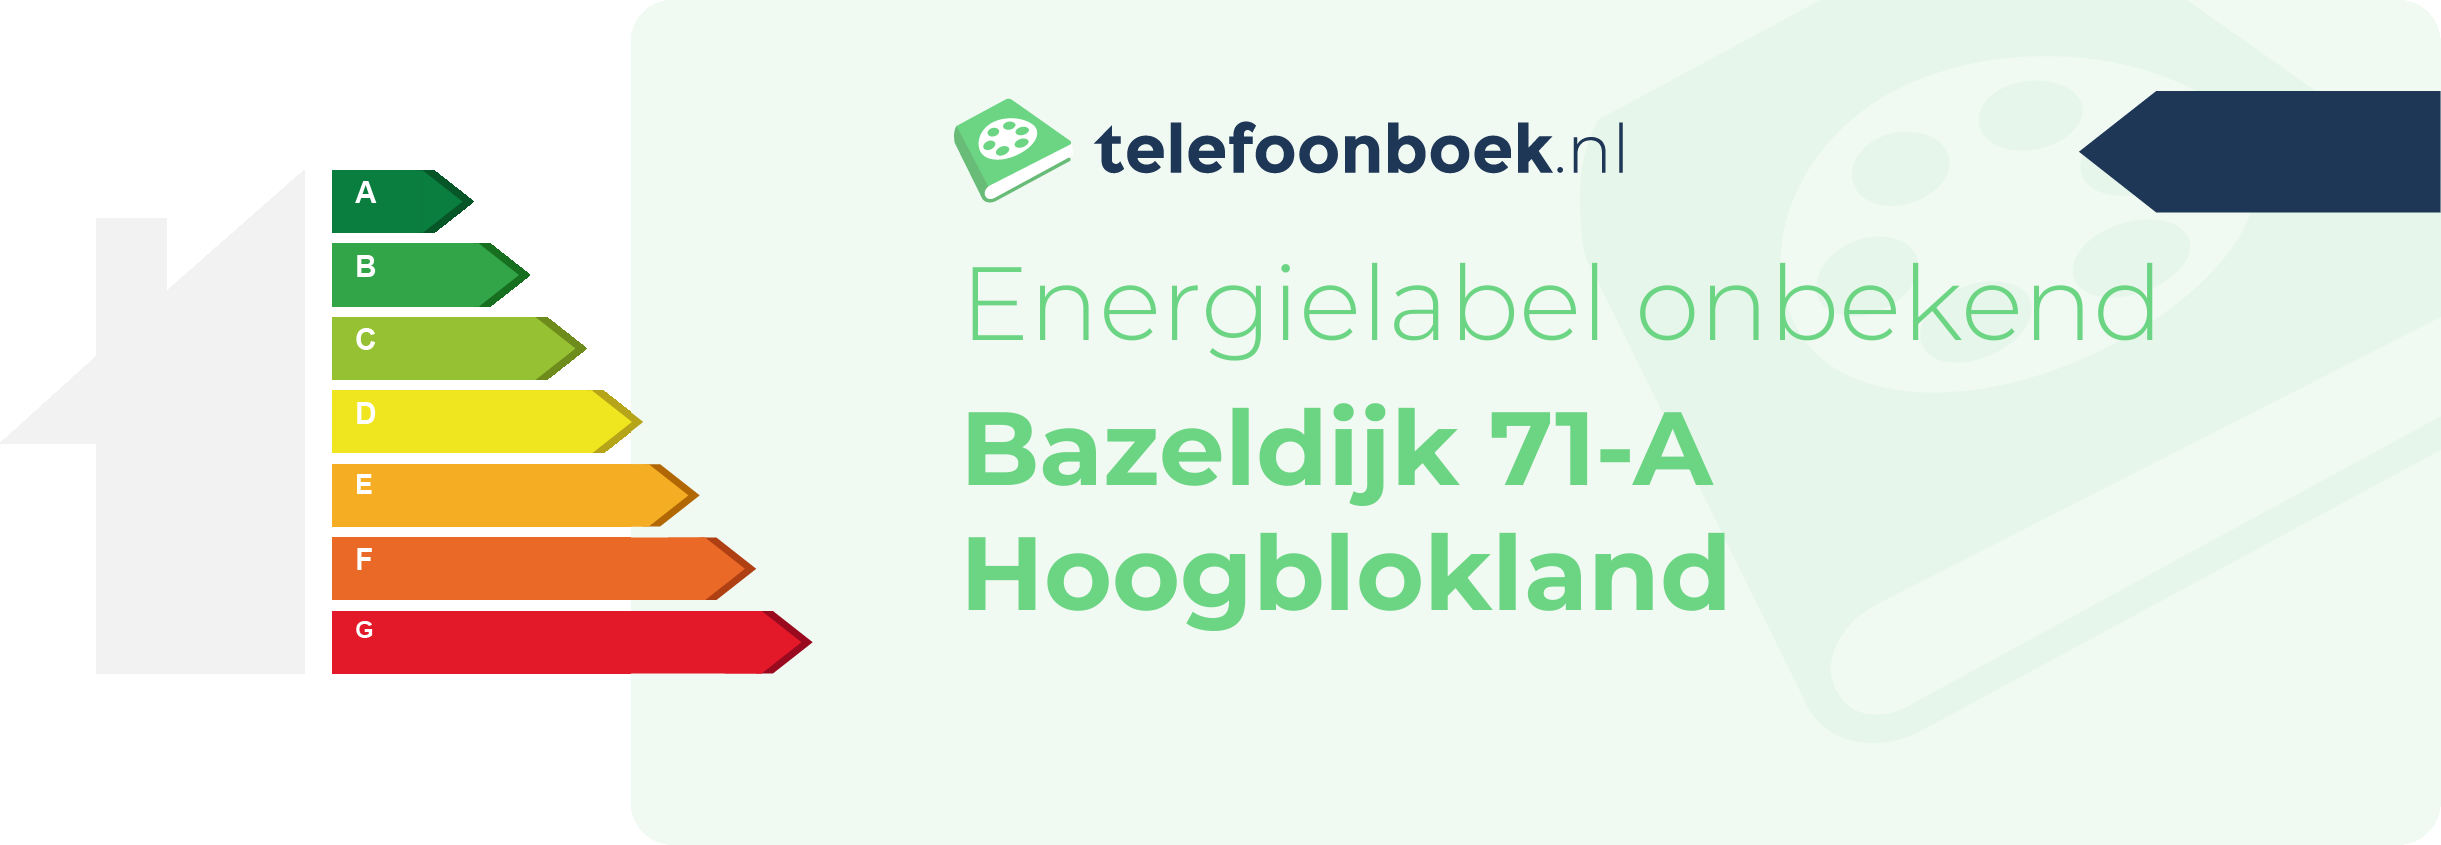 Energielabel Bazeldijk 71-A Hoogblokland